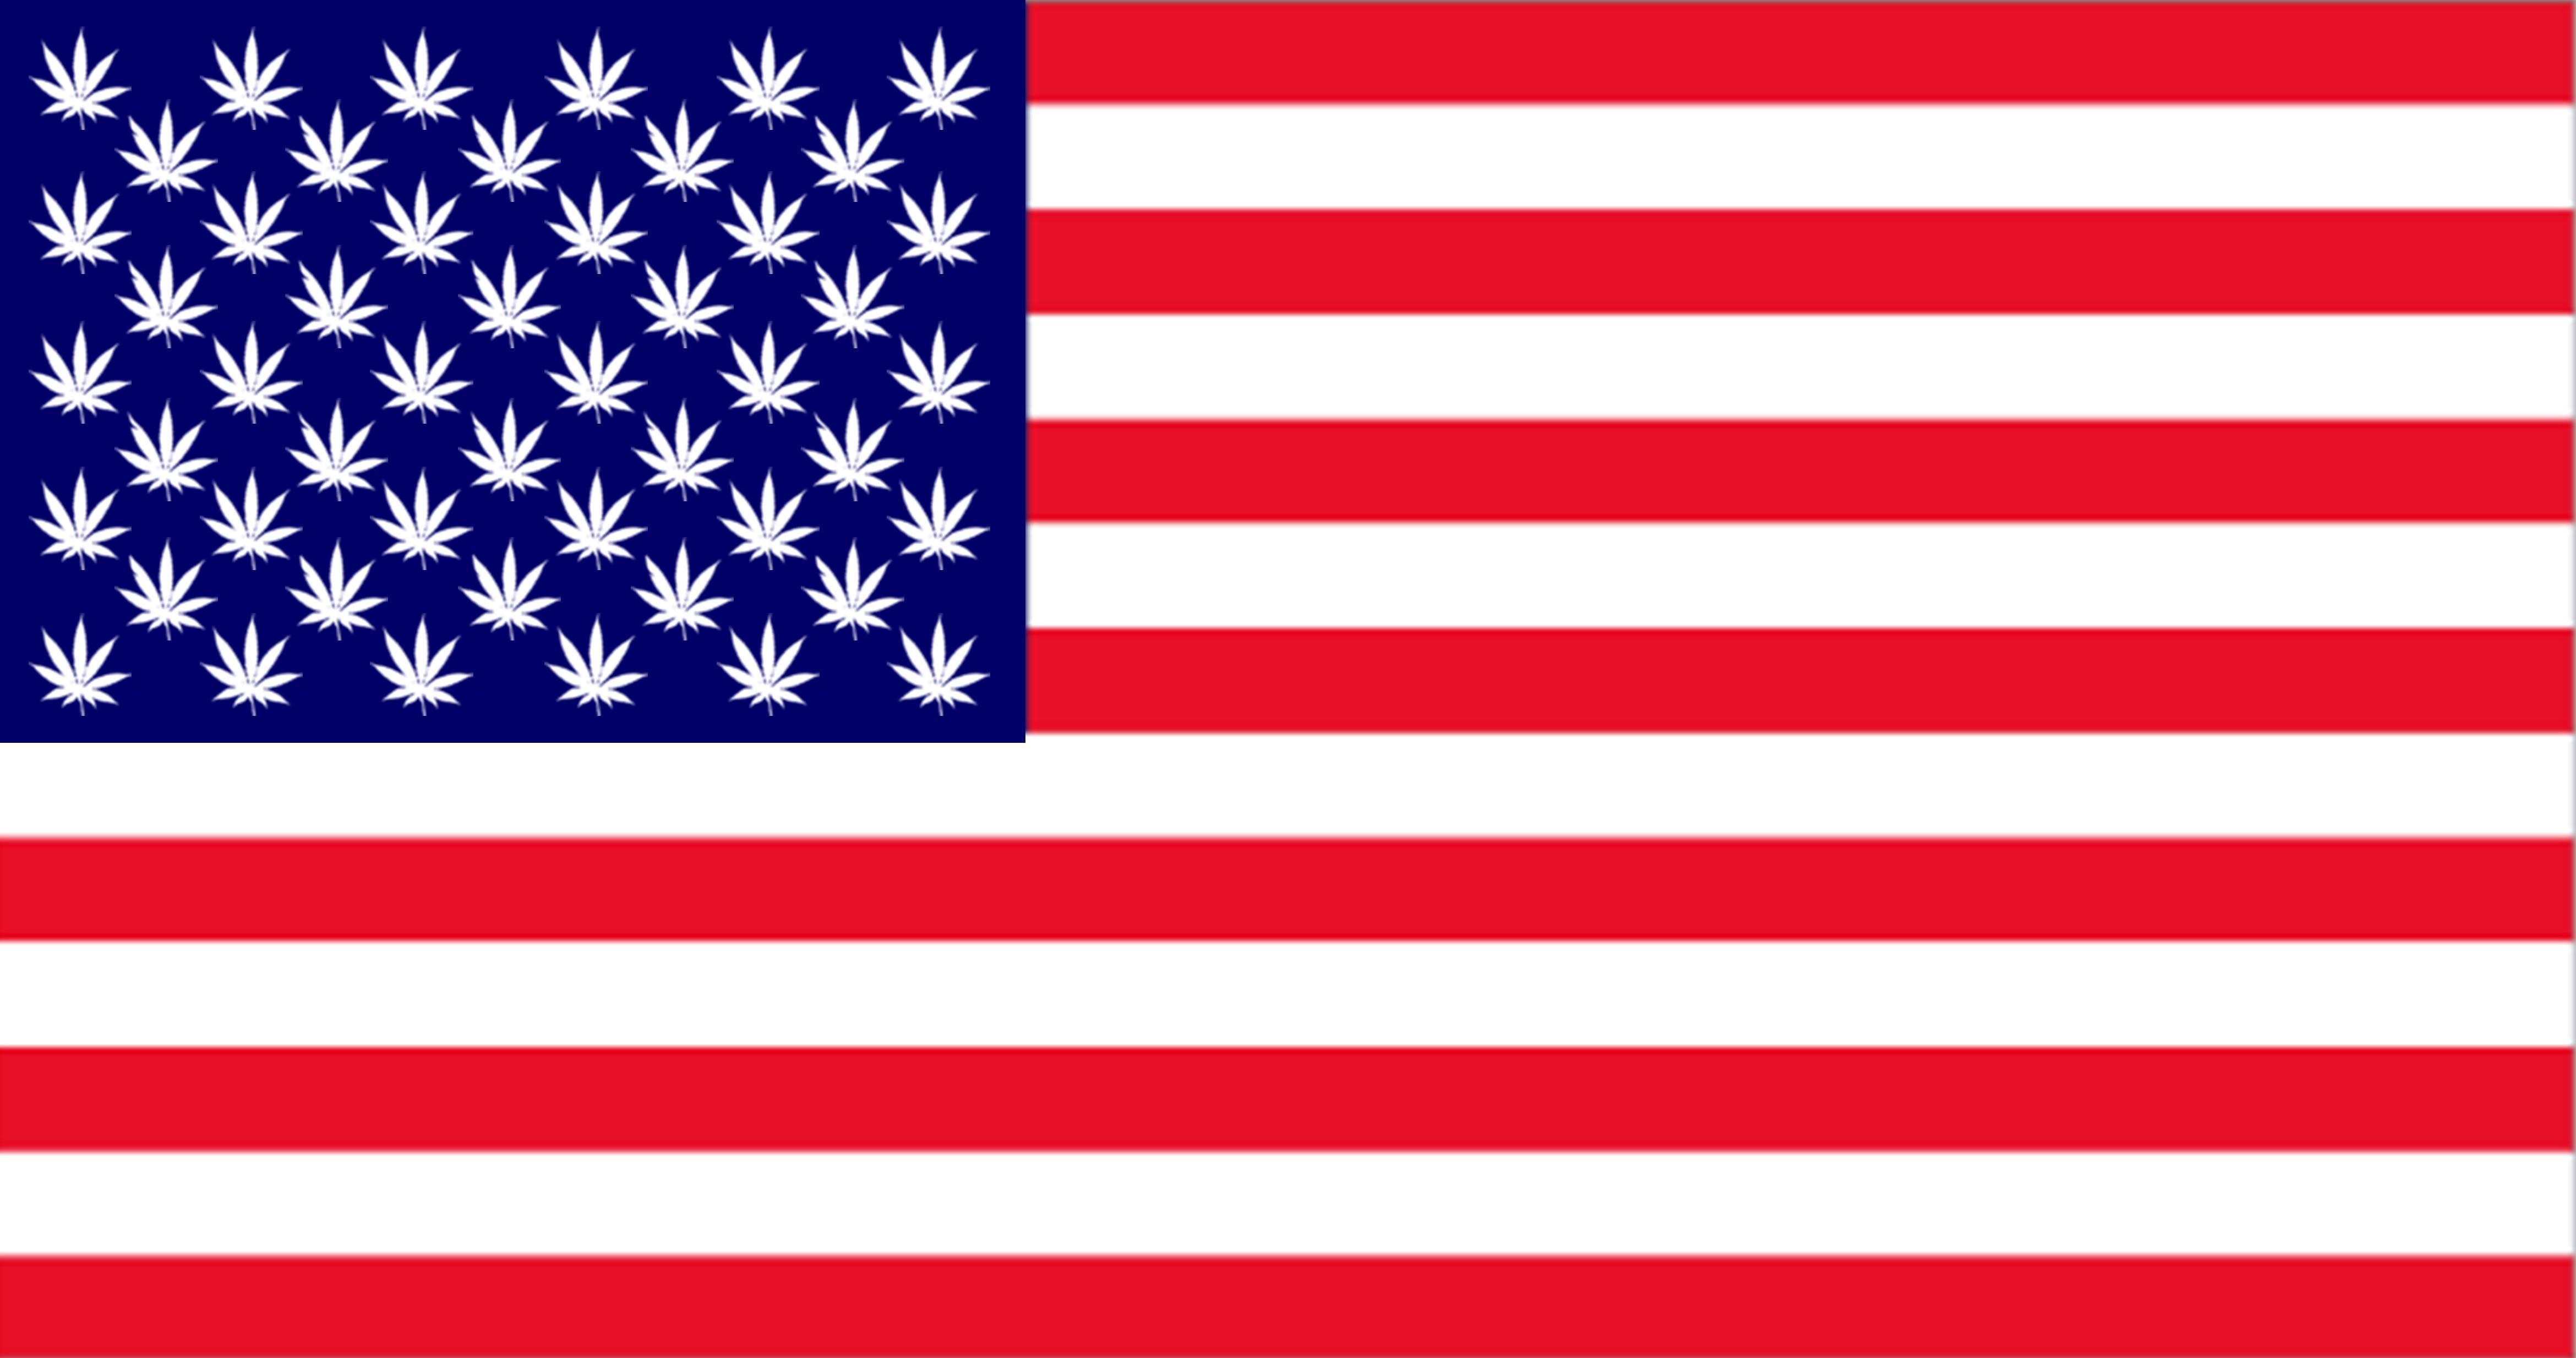 U.S. flag with cannabis stars